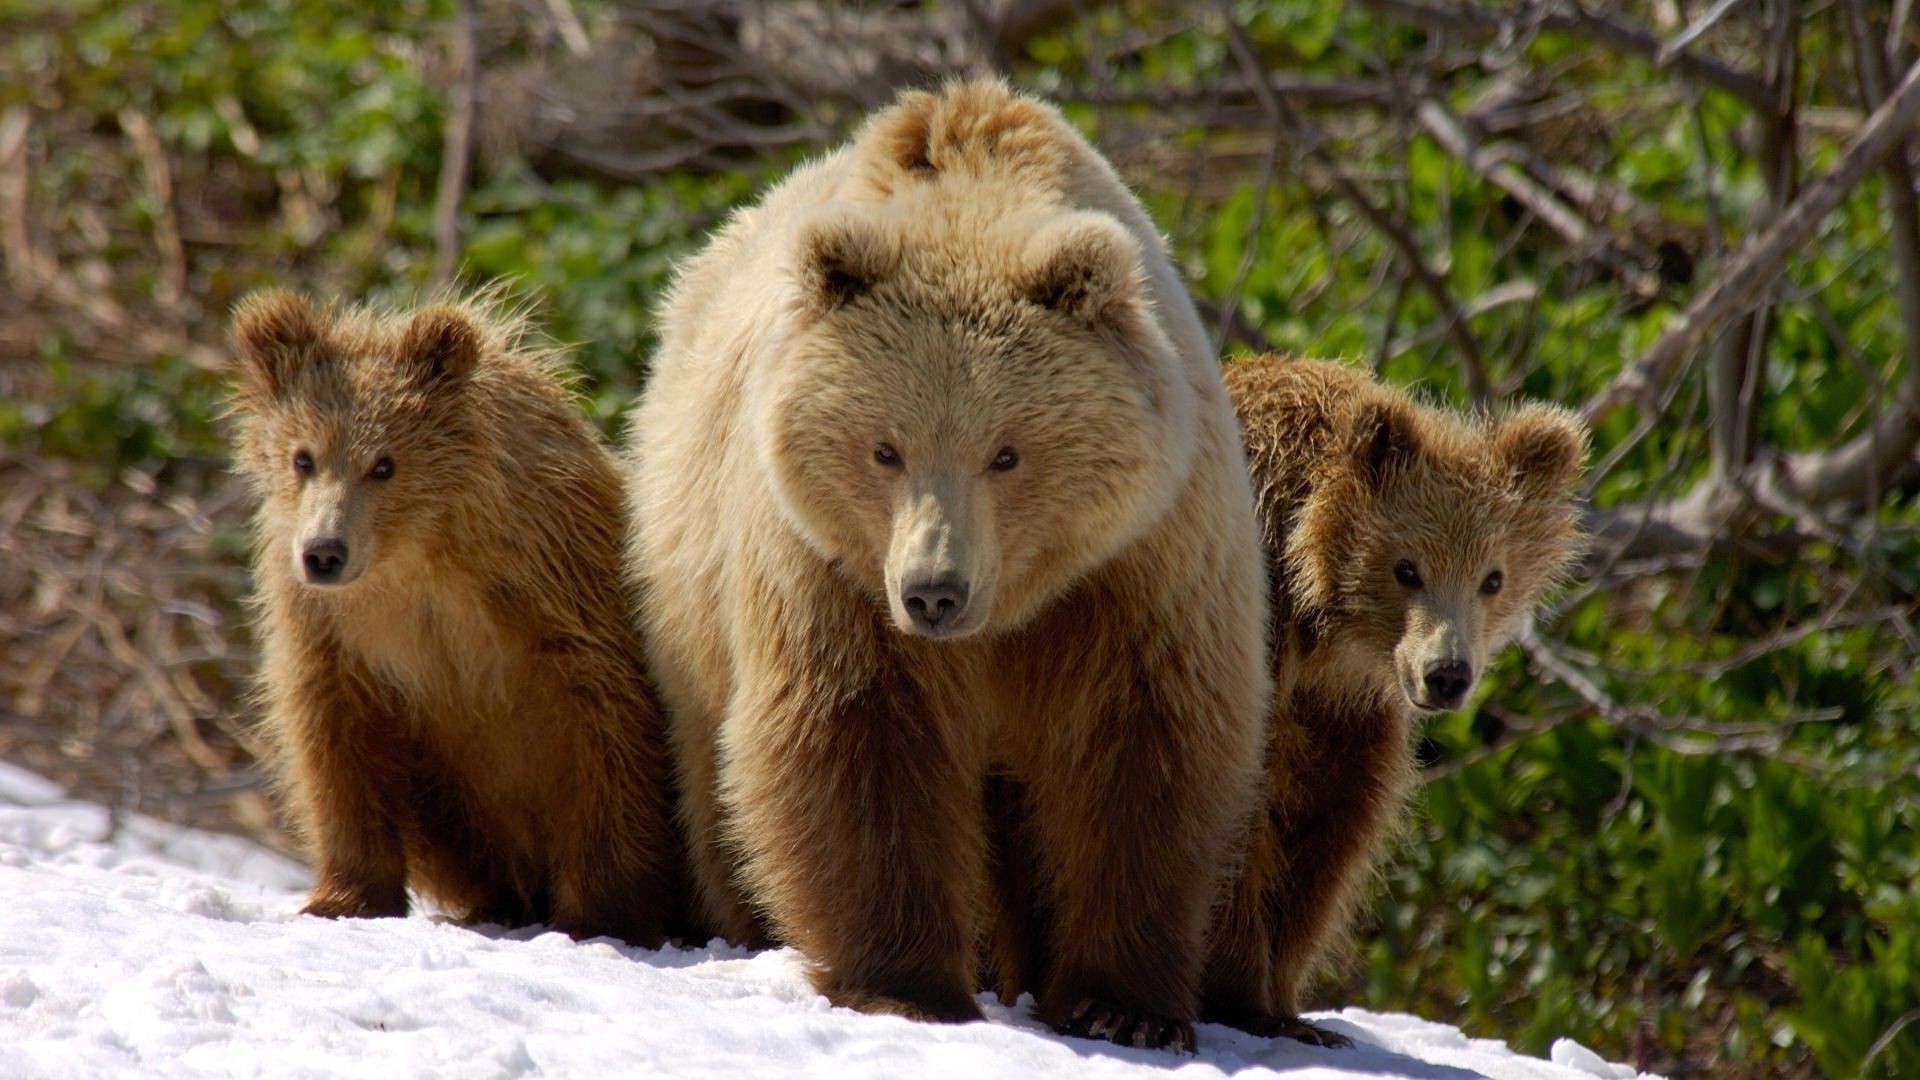 bears wildlife mammal nature animal wild outdoors fur predator carnivore zoo wood